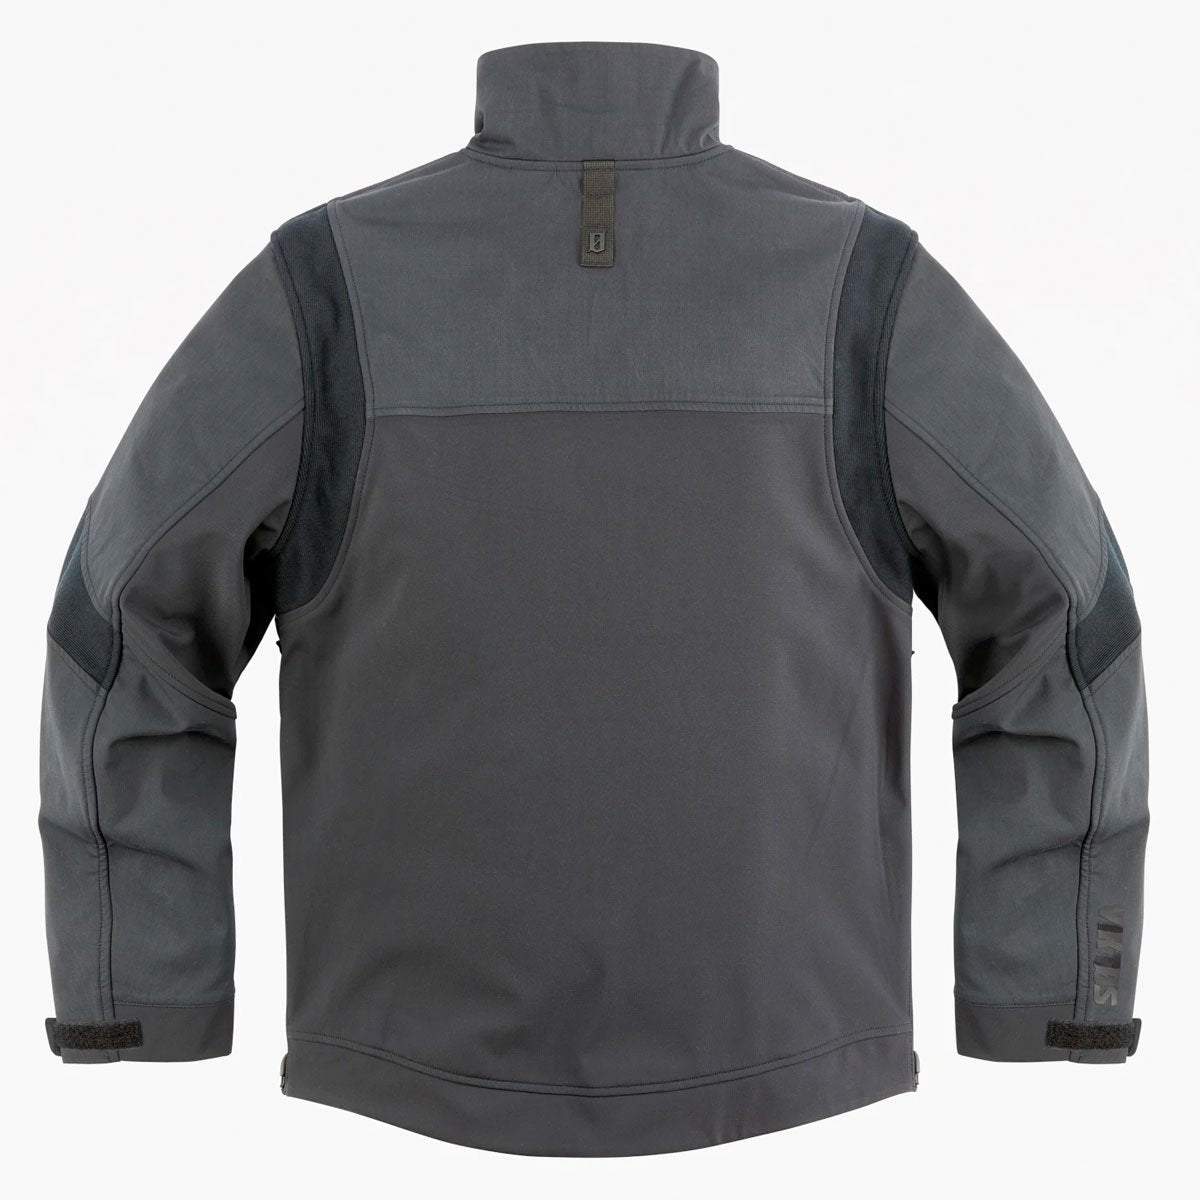 VIKTOS COMBONOVA Softshell Jacket Black Outerwear VIKTOS Tactical Gear Supplier Tactical Distributors Australia